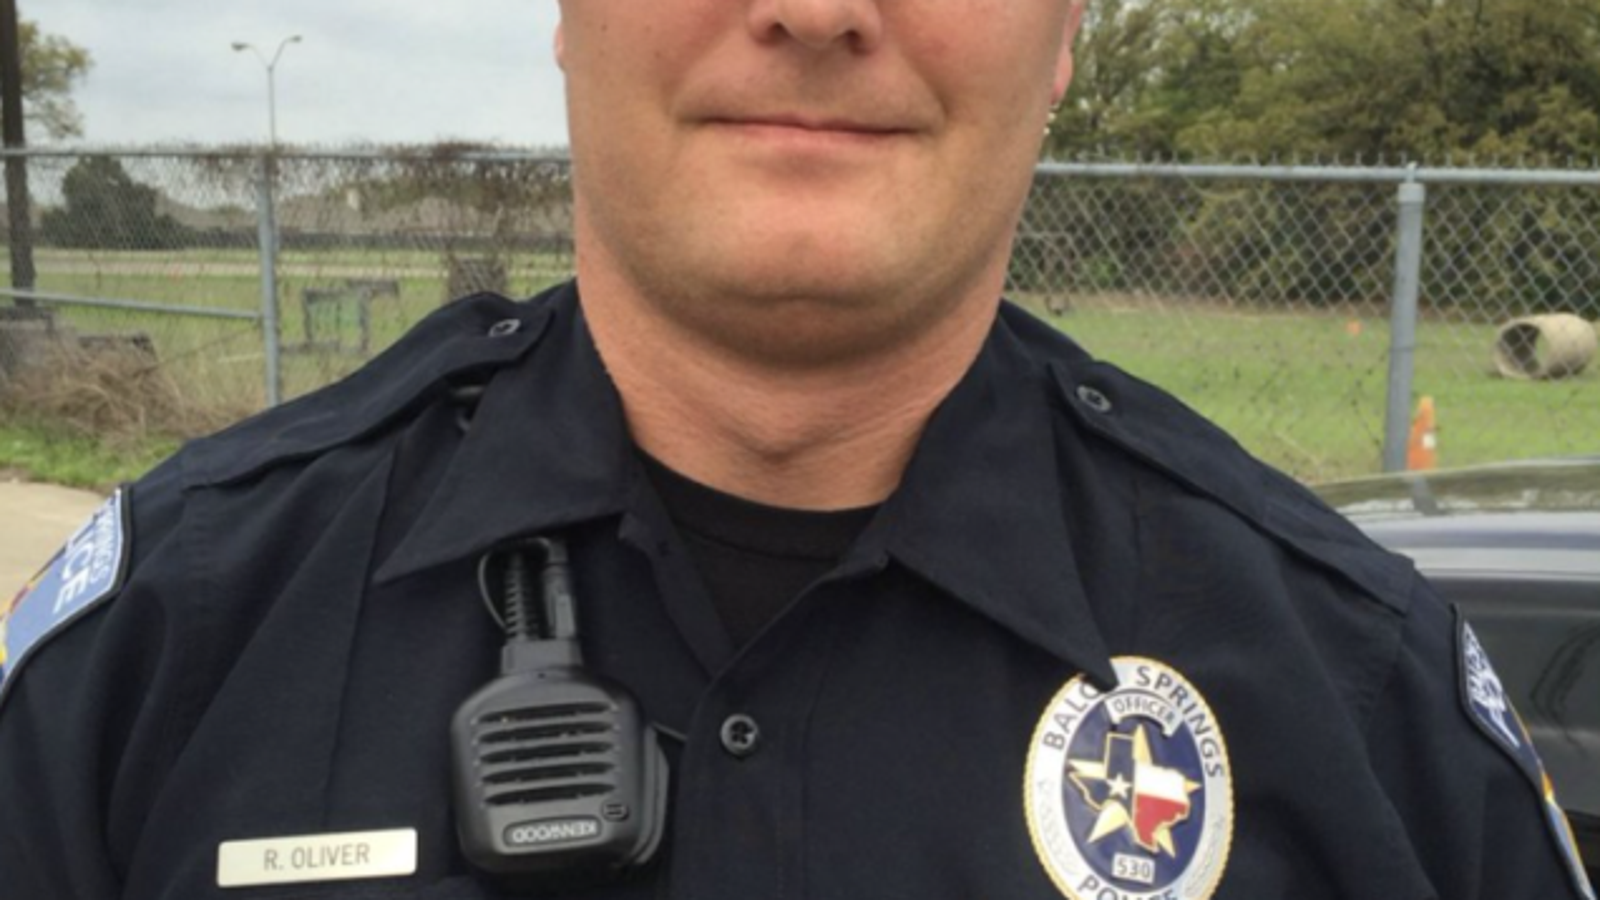 Murder Warrant Issued For Roy Oliver Texas Cop Who Killed Jordan Edwards